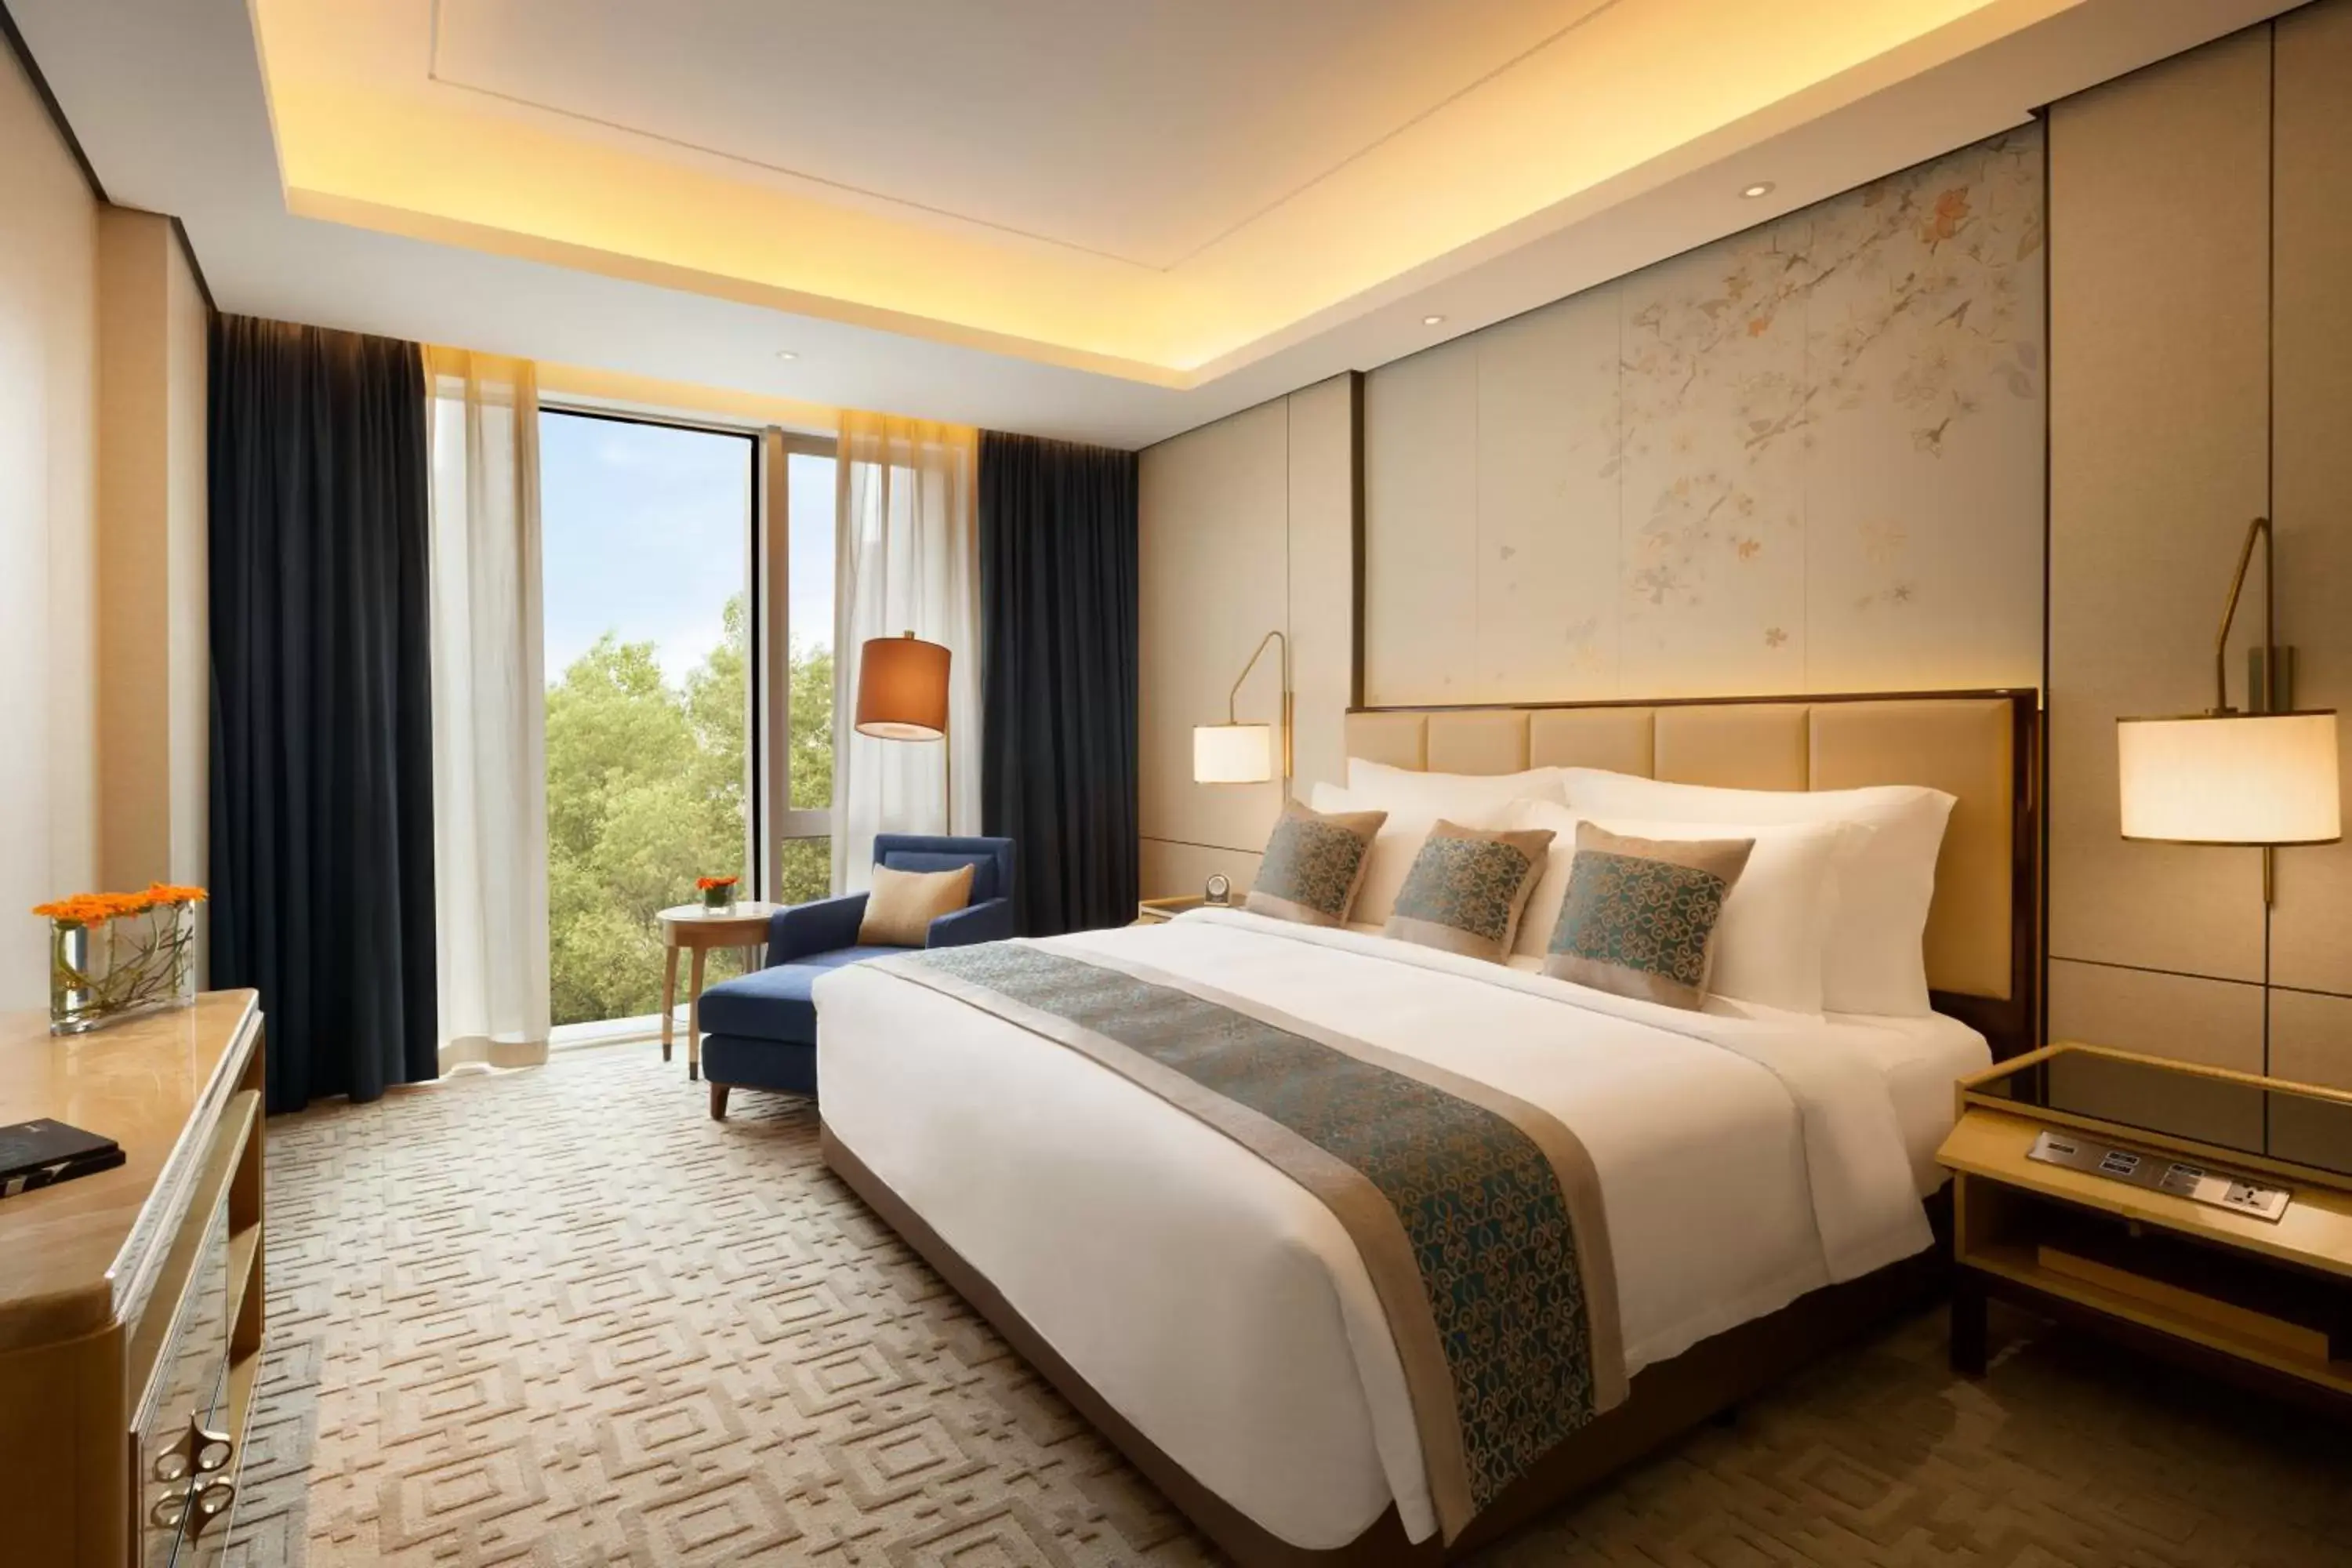 Bed, Room Photo in Kempinski Hotel Fuzhou